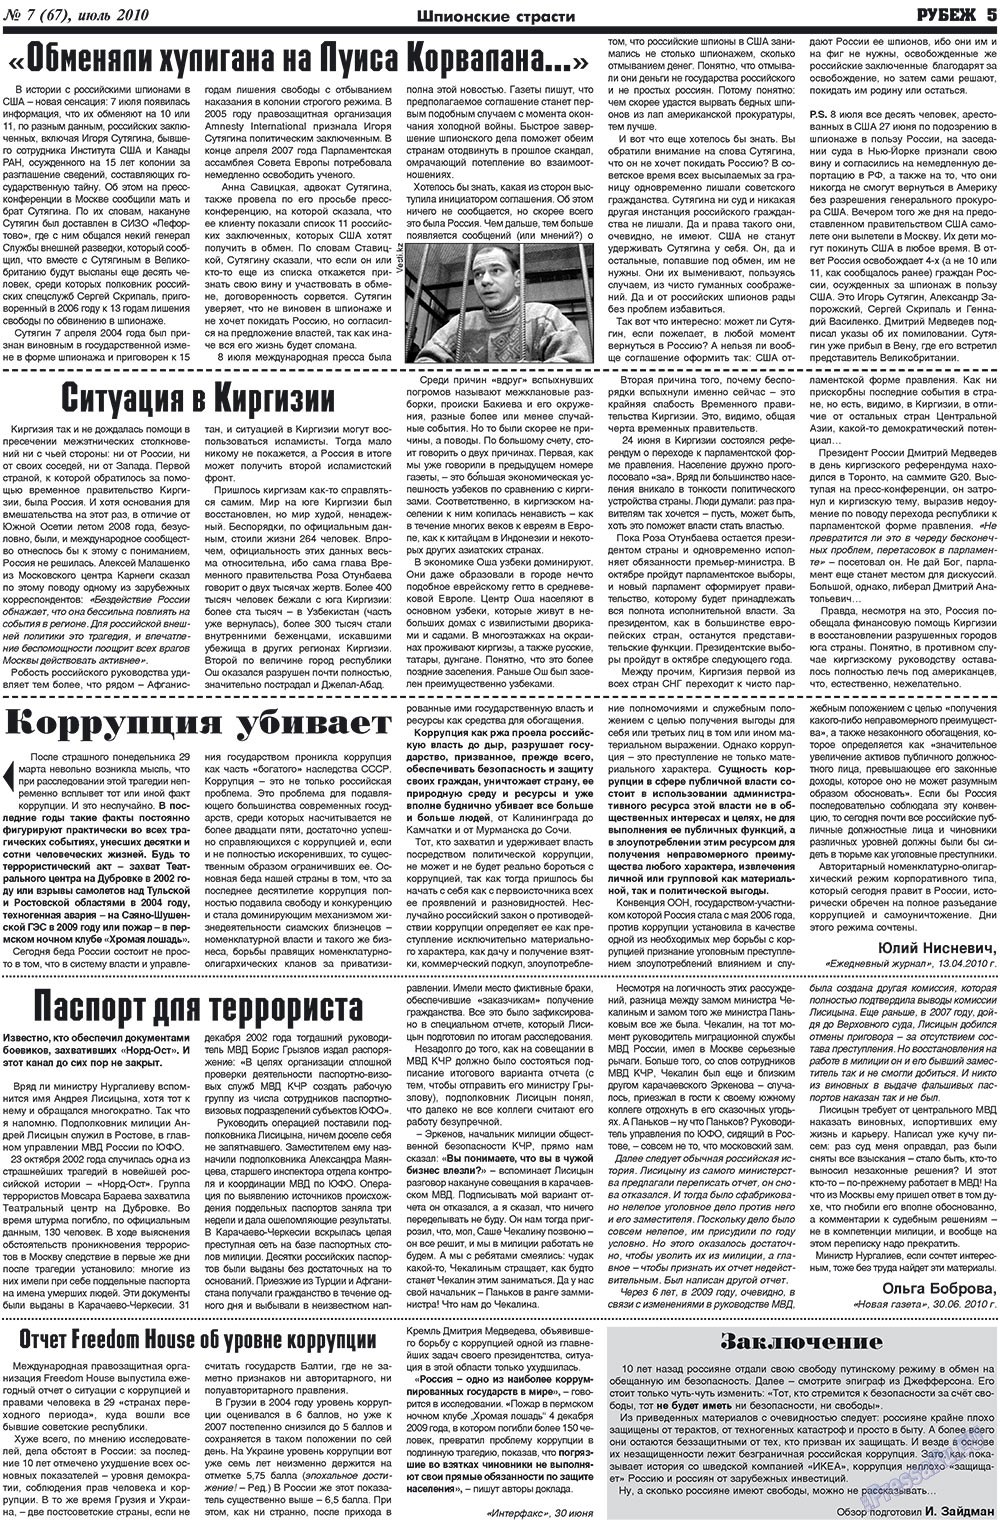 Рубеж, газета. 2010 №7 стр.5